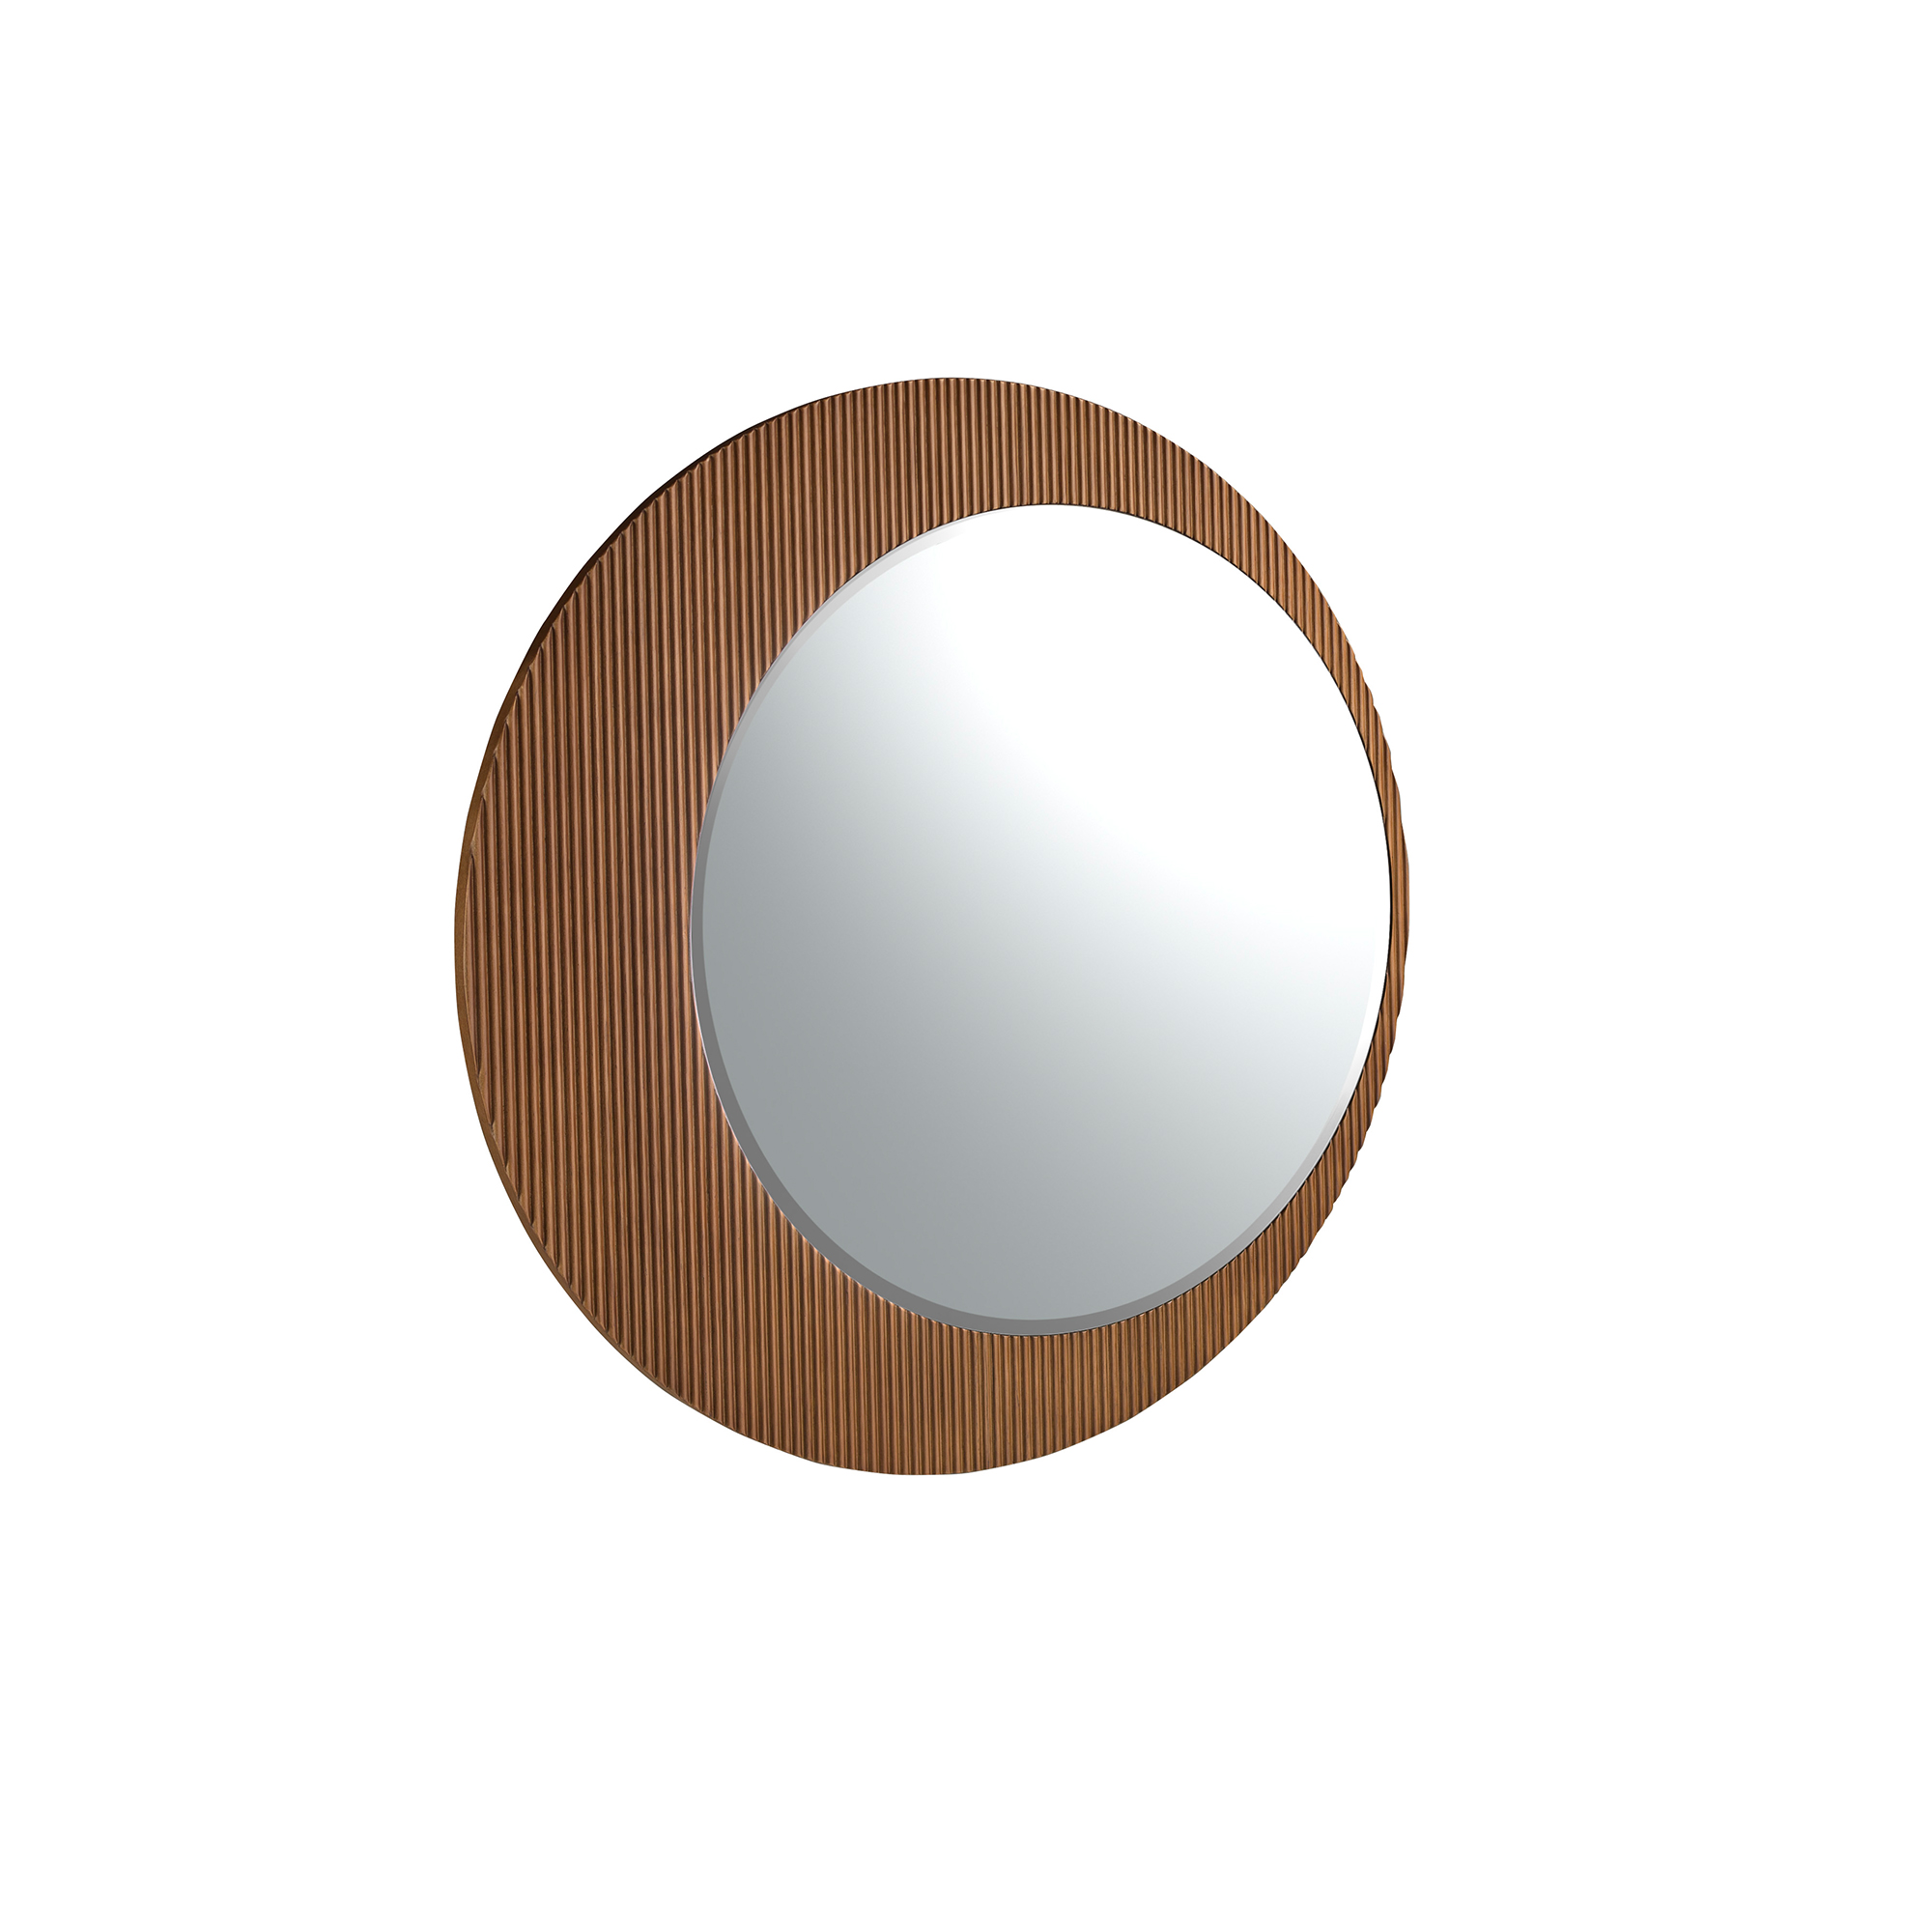 Round walnut wall mirror